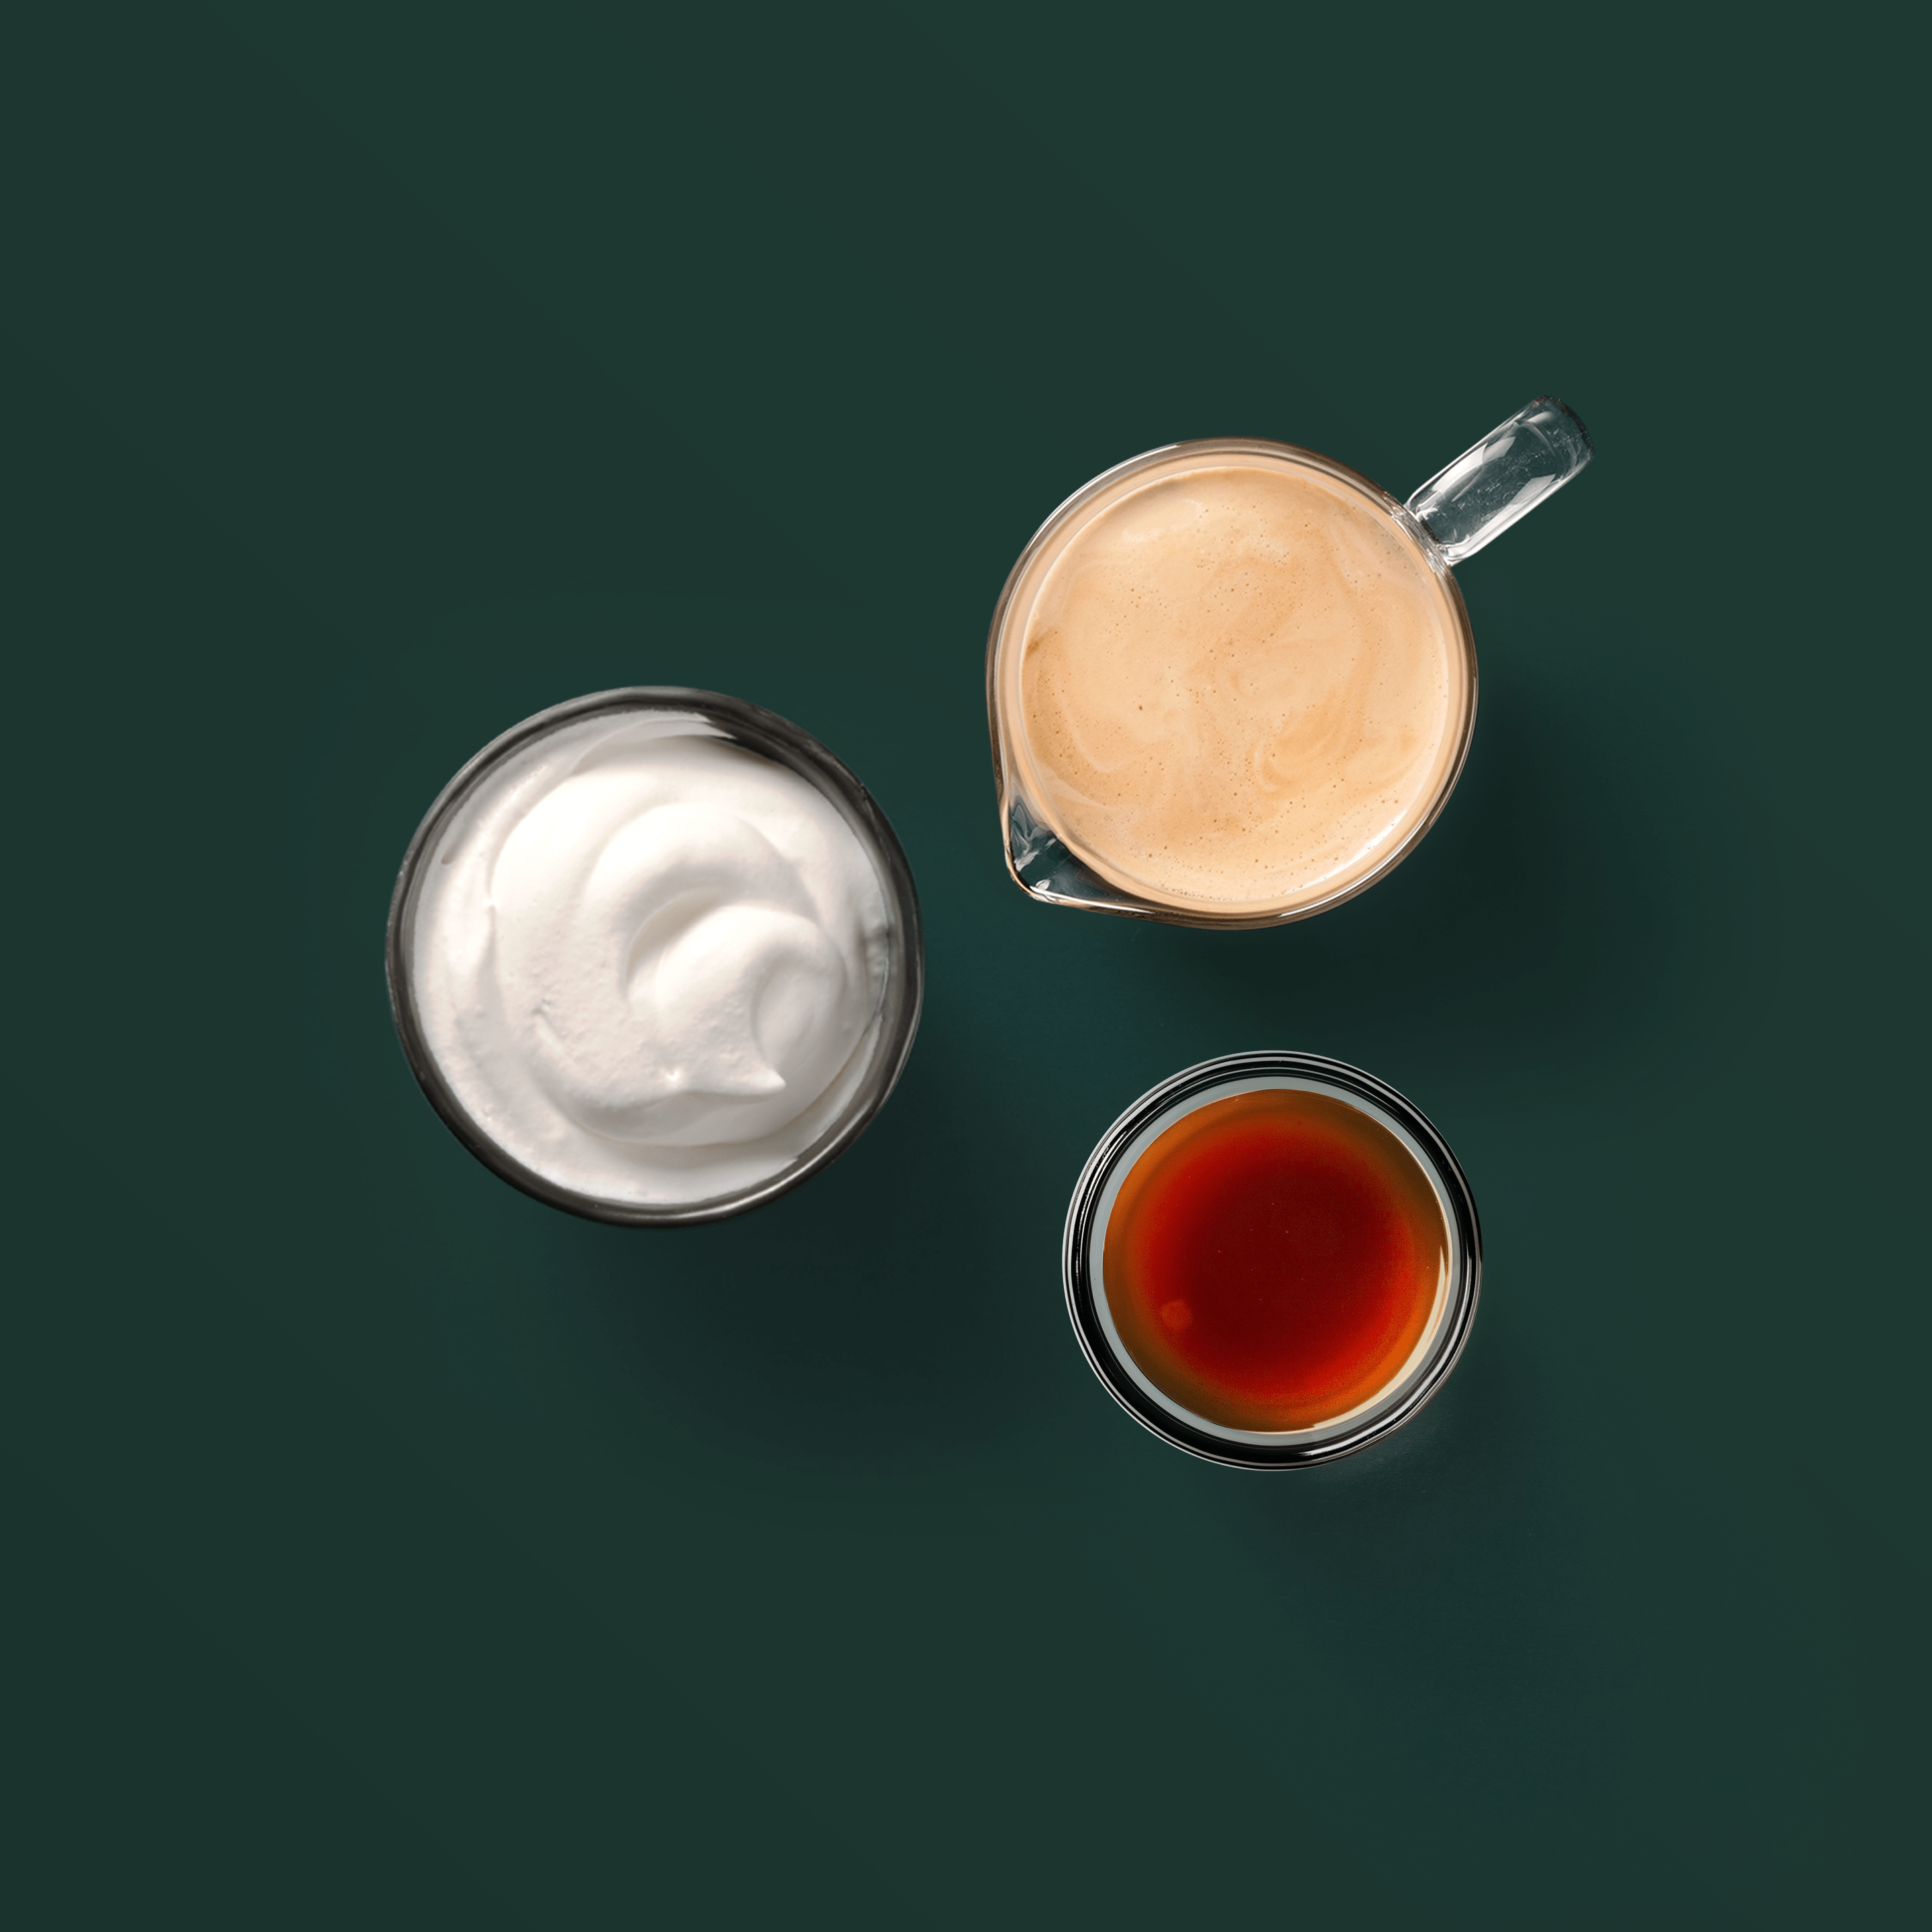 Salted Caramel Espresso ingredients